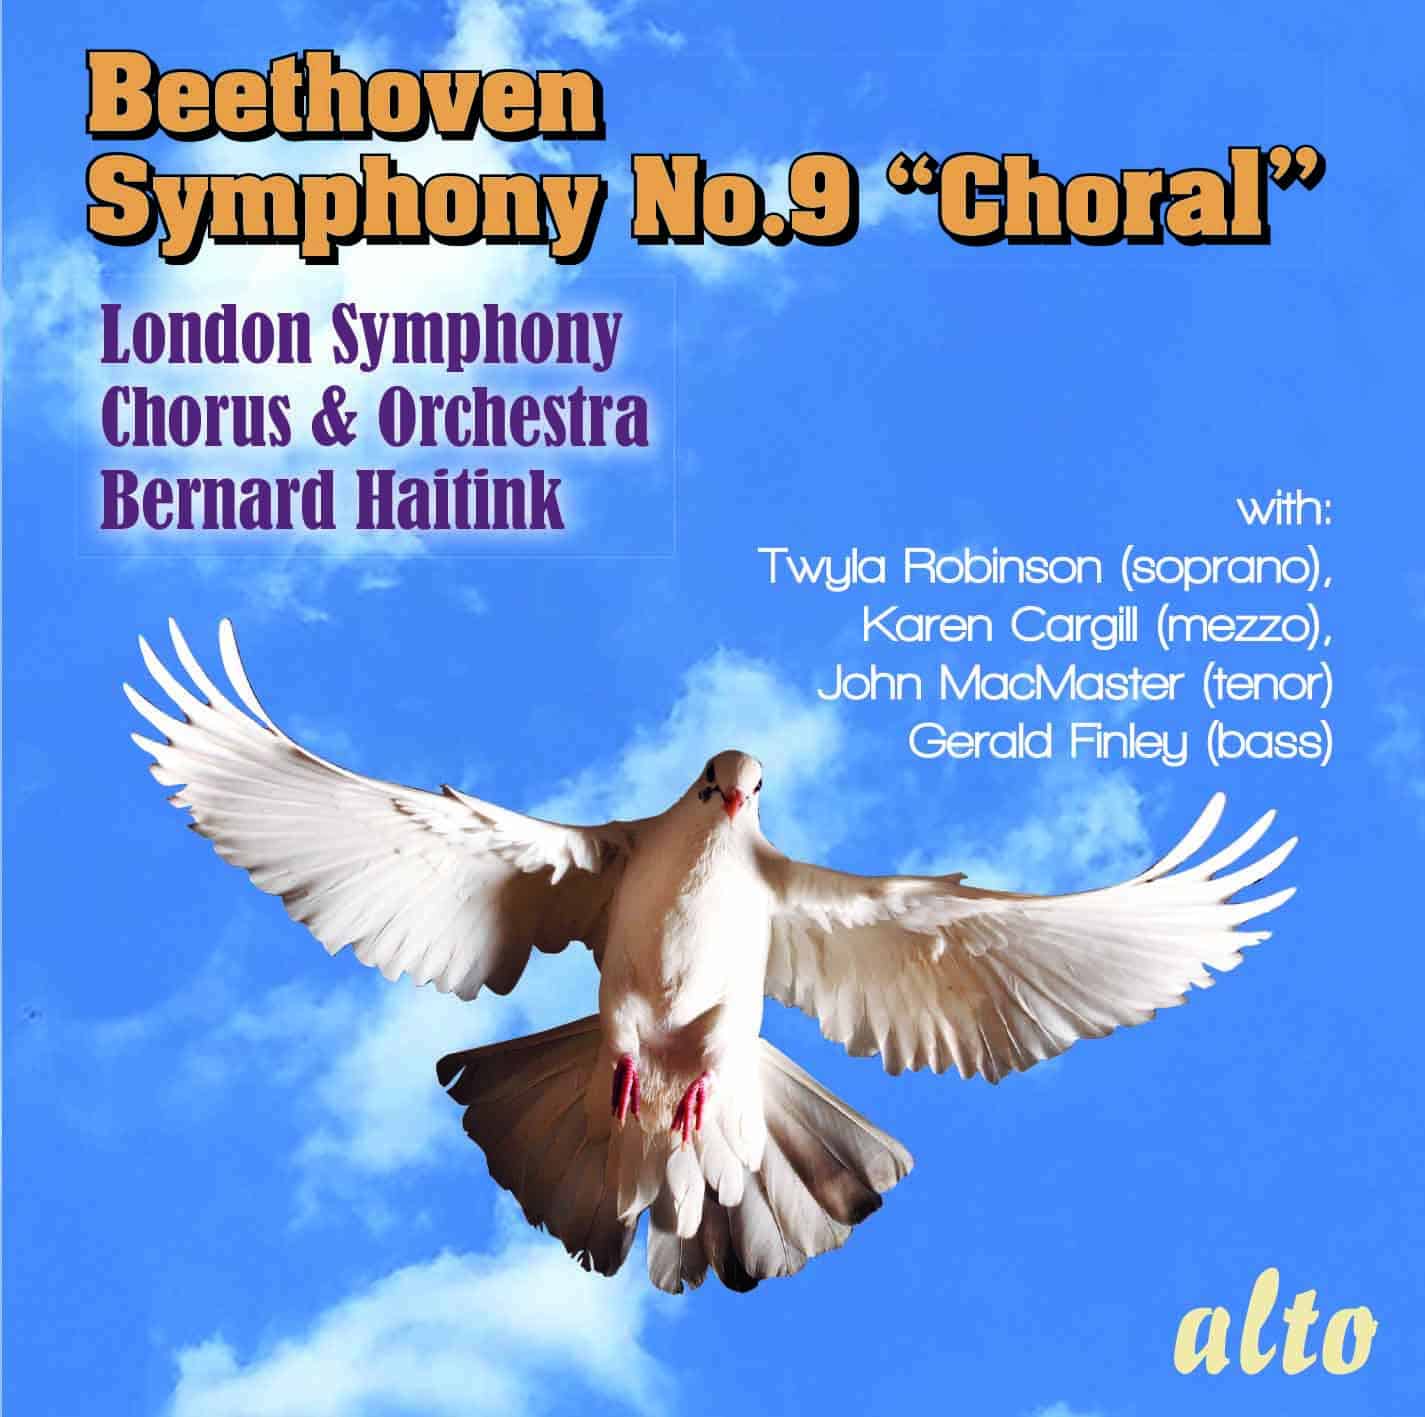 Beethoven: Symphony No. 9 “Choral”